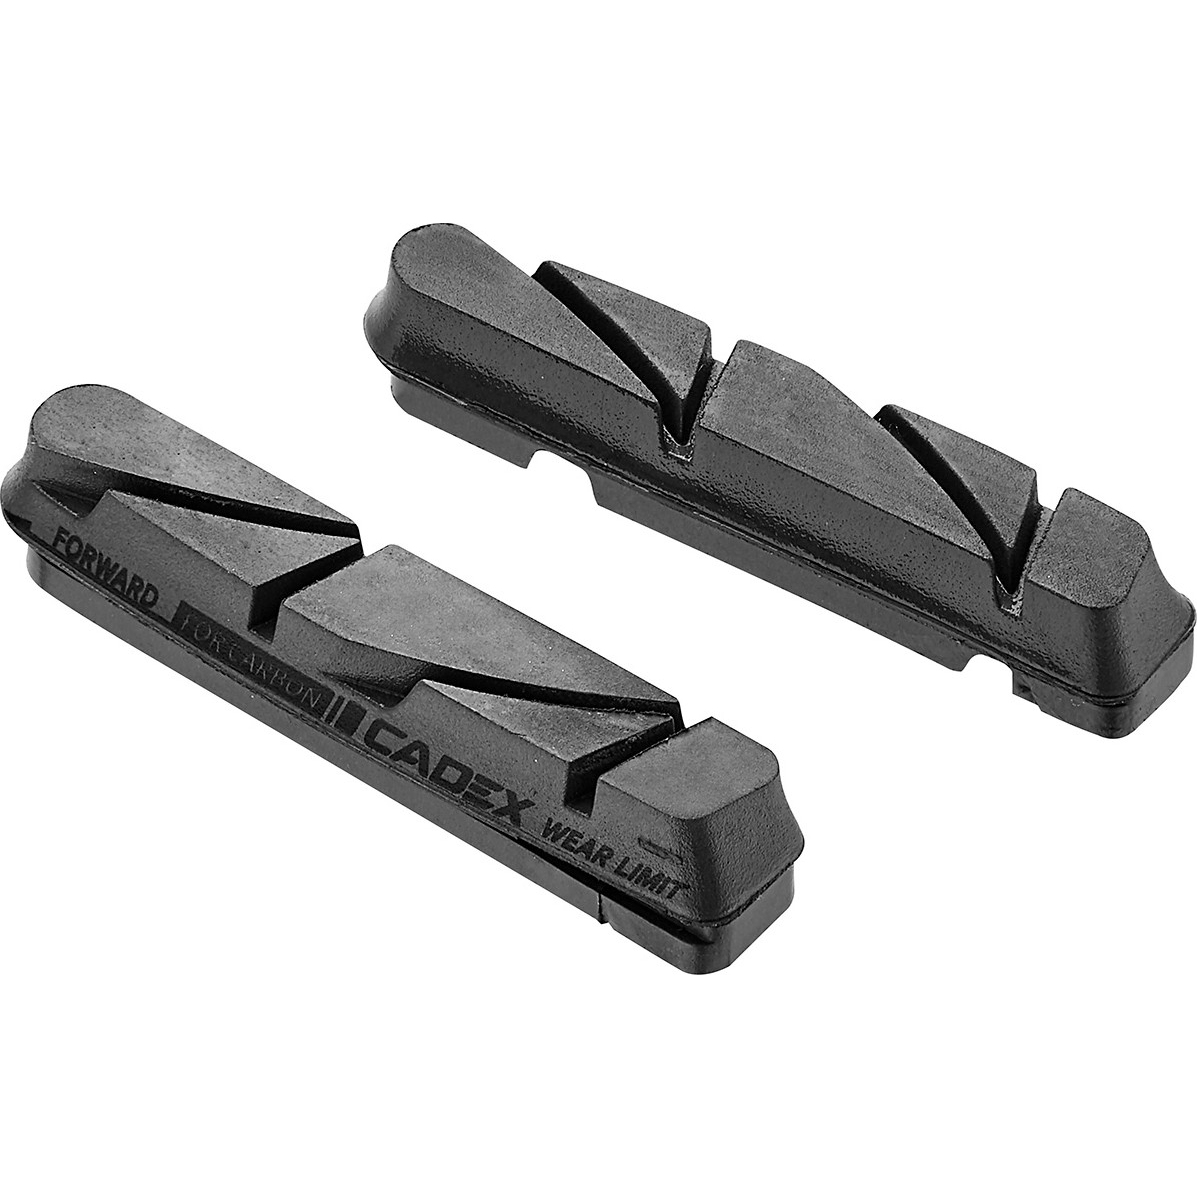 Productfoto van CADEX Brake Pads for Carbon Rims - 290000057